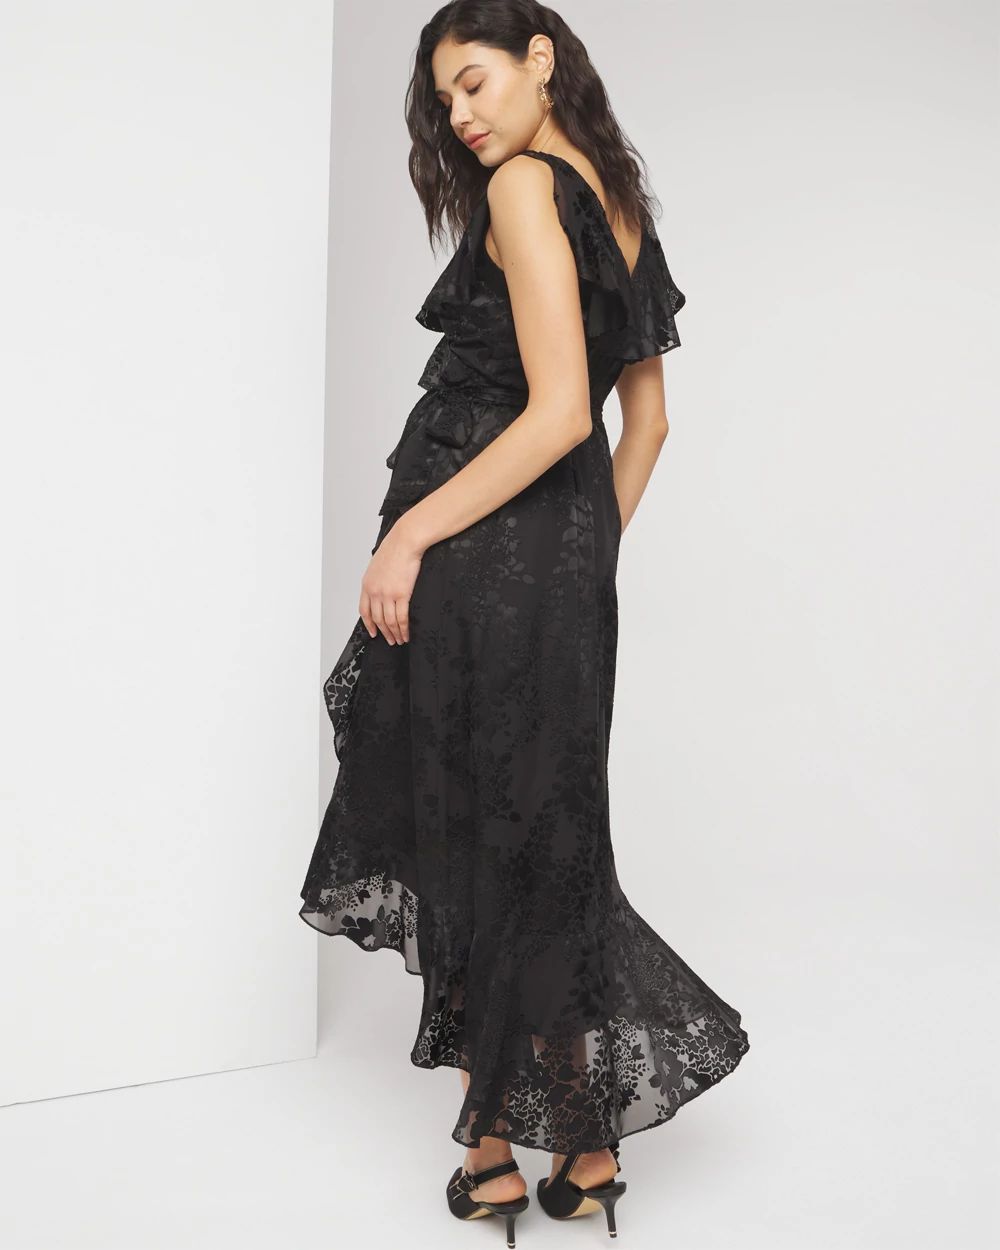 Petite Sleeveless Burnout Wrap Midi Dress click to view larger image.